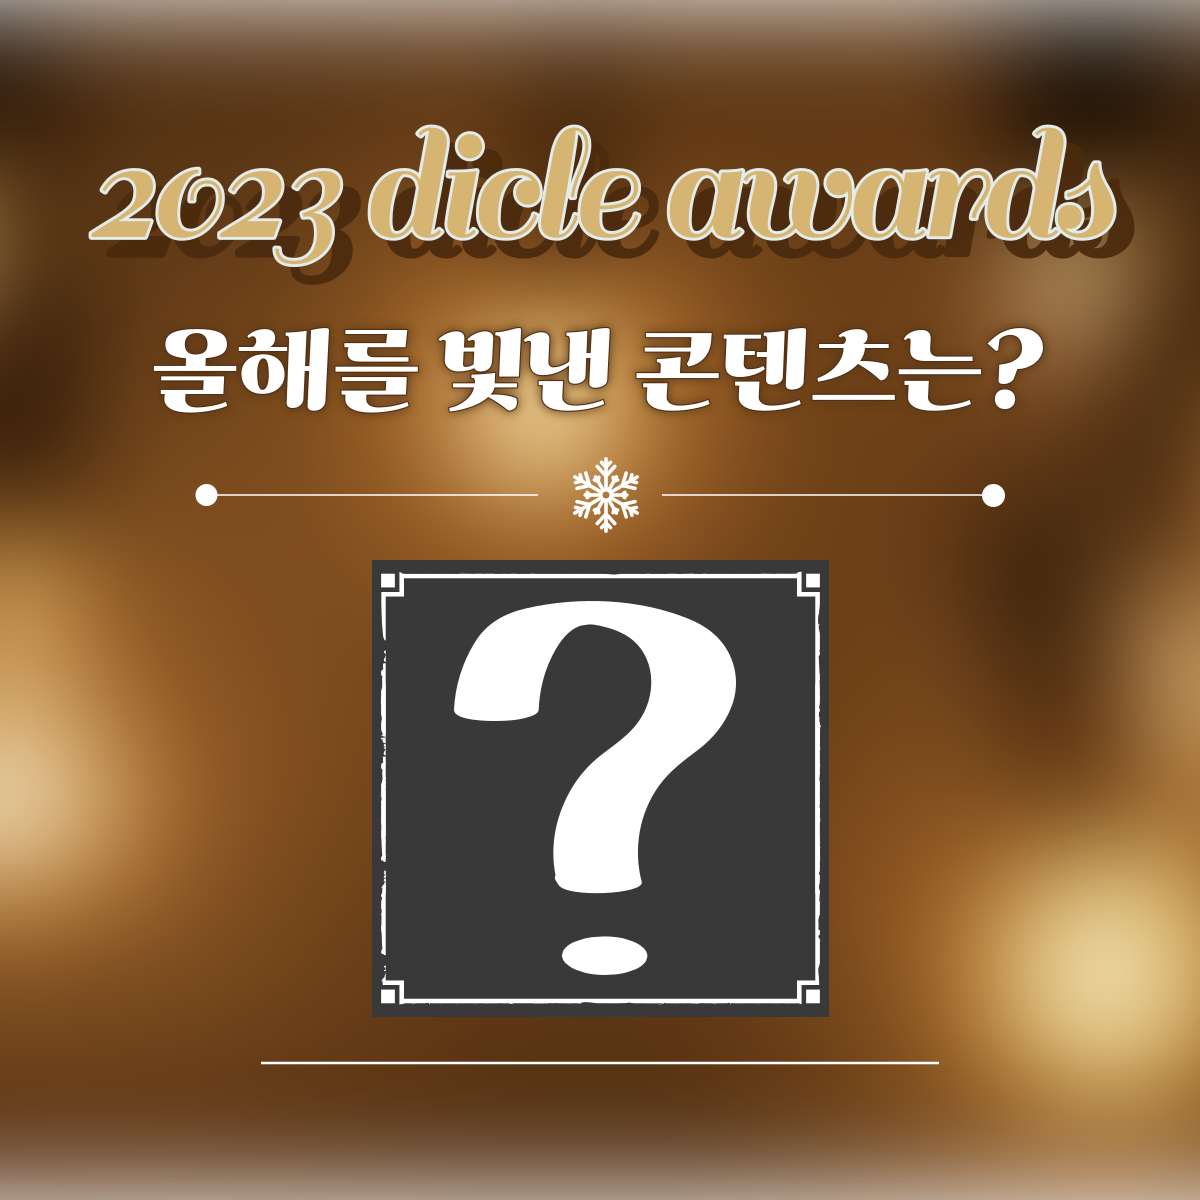 2023 dicle awards 올해를 빛낸콘텐츠는?